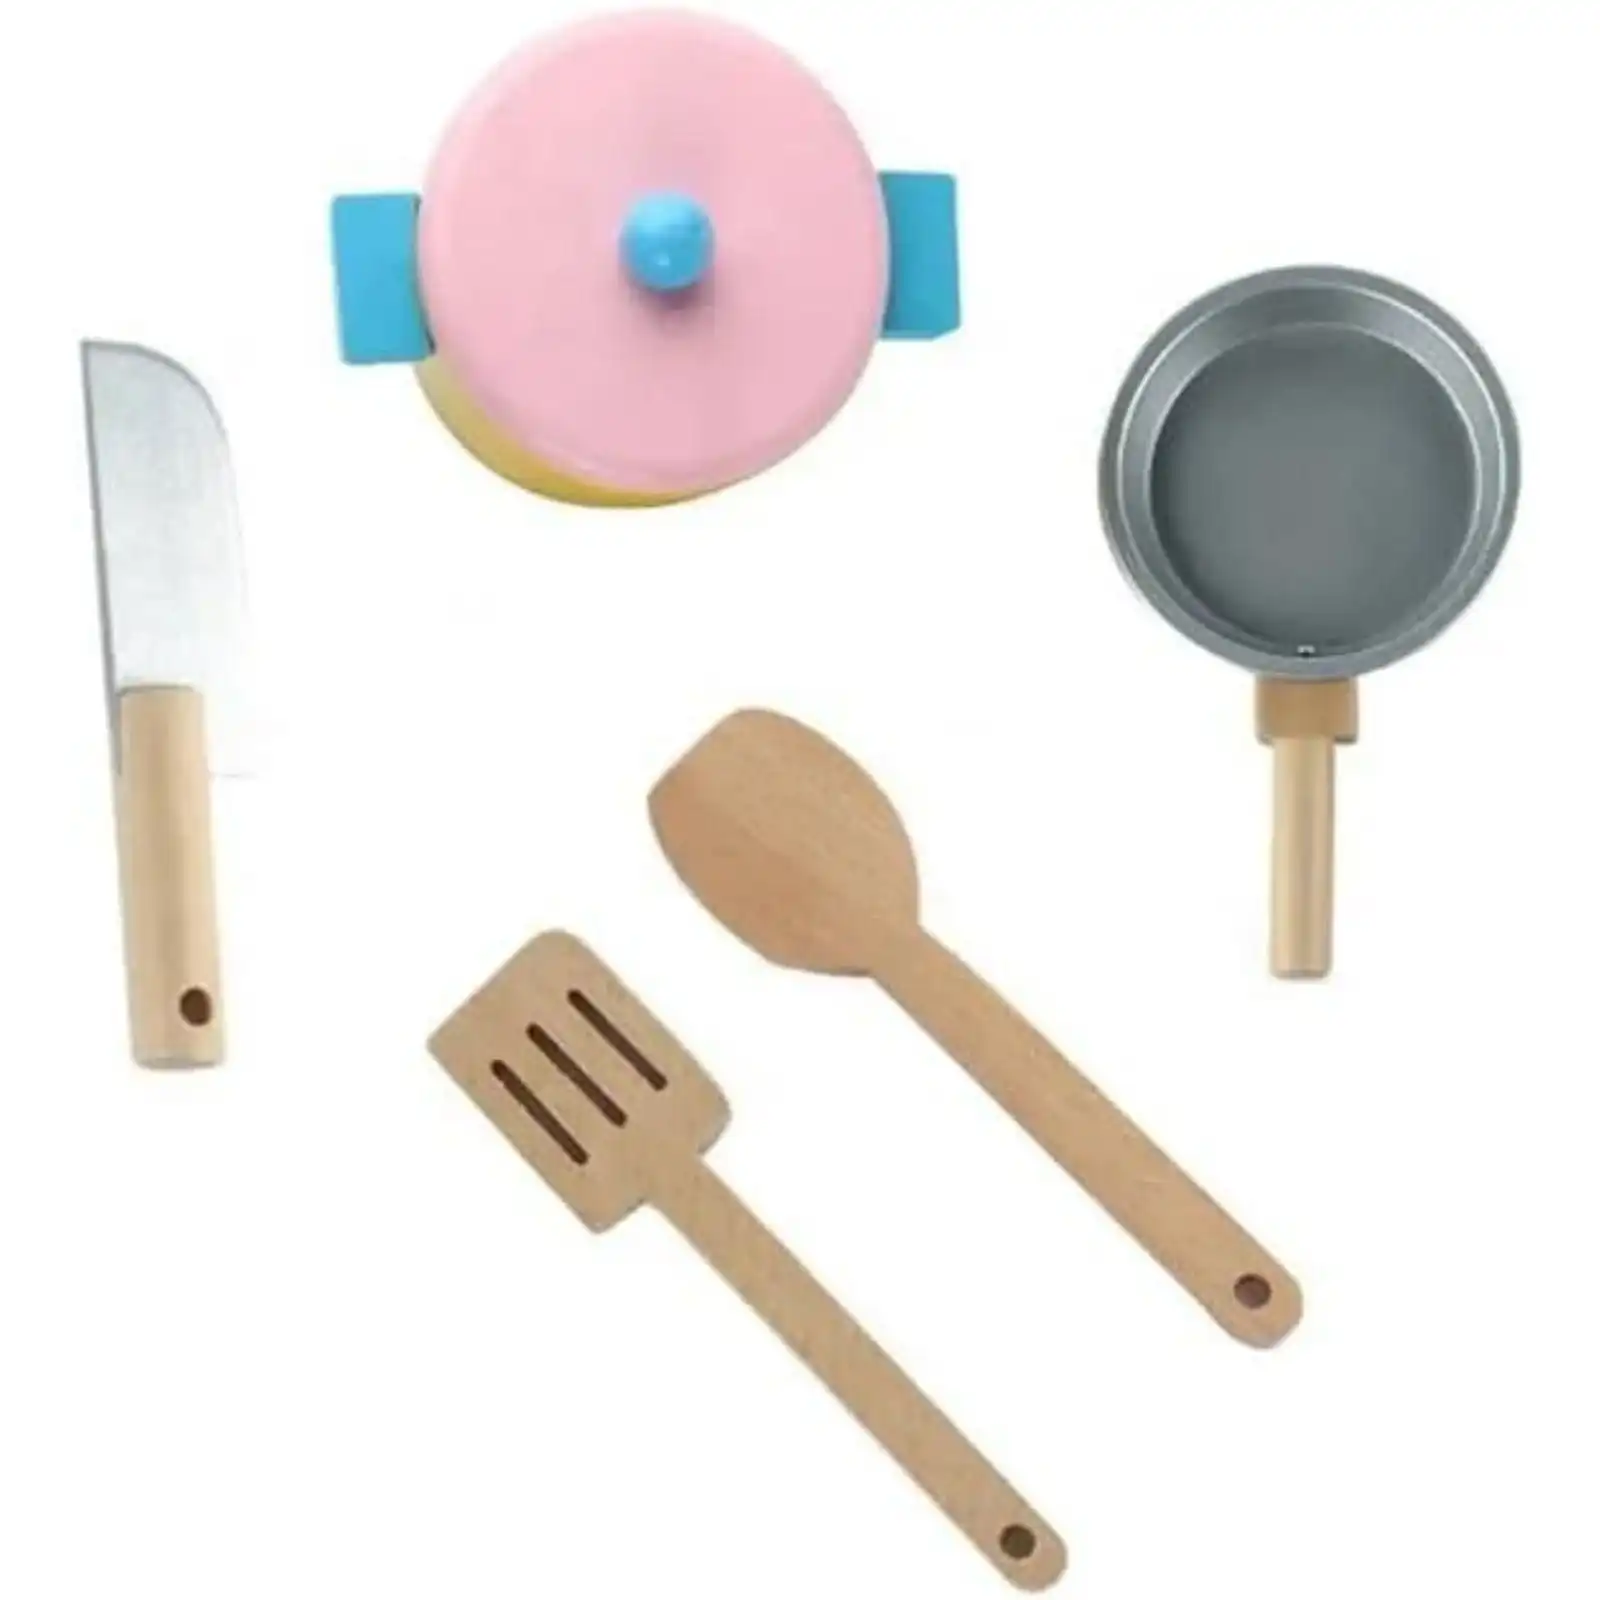 Ekkio High-quality Mdf Board Environmentally Friendly Material Wooden Kitchen Playset For Kids (Puppy Shape Kitchen Set)